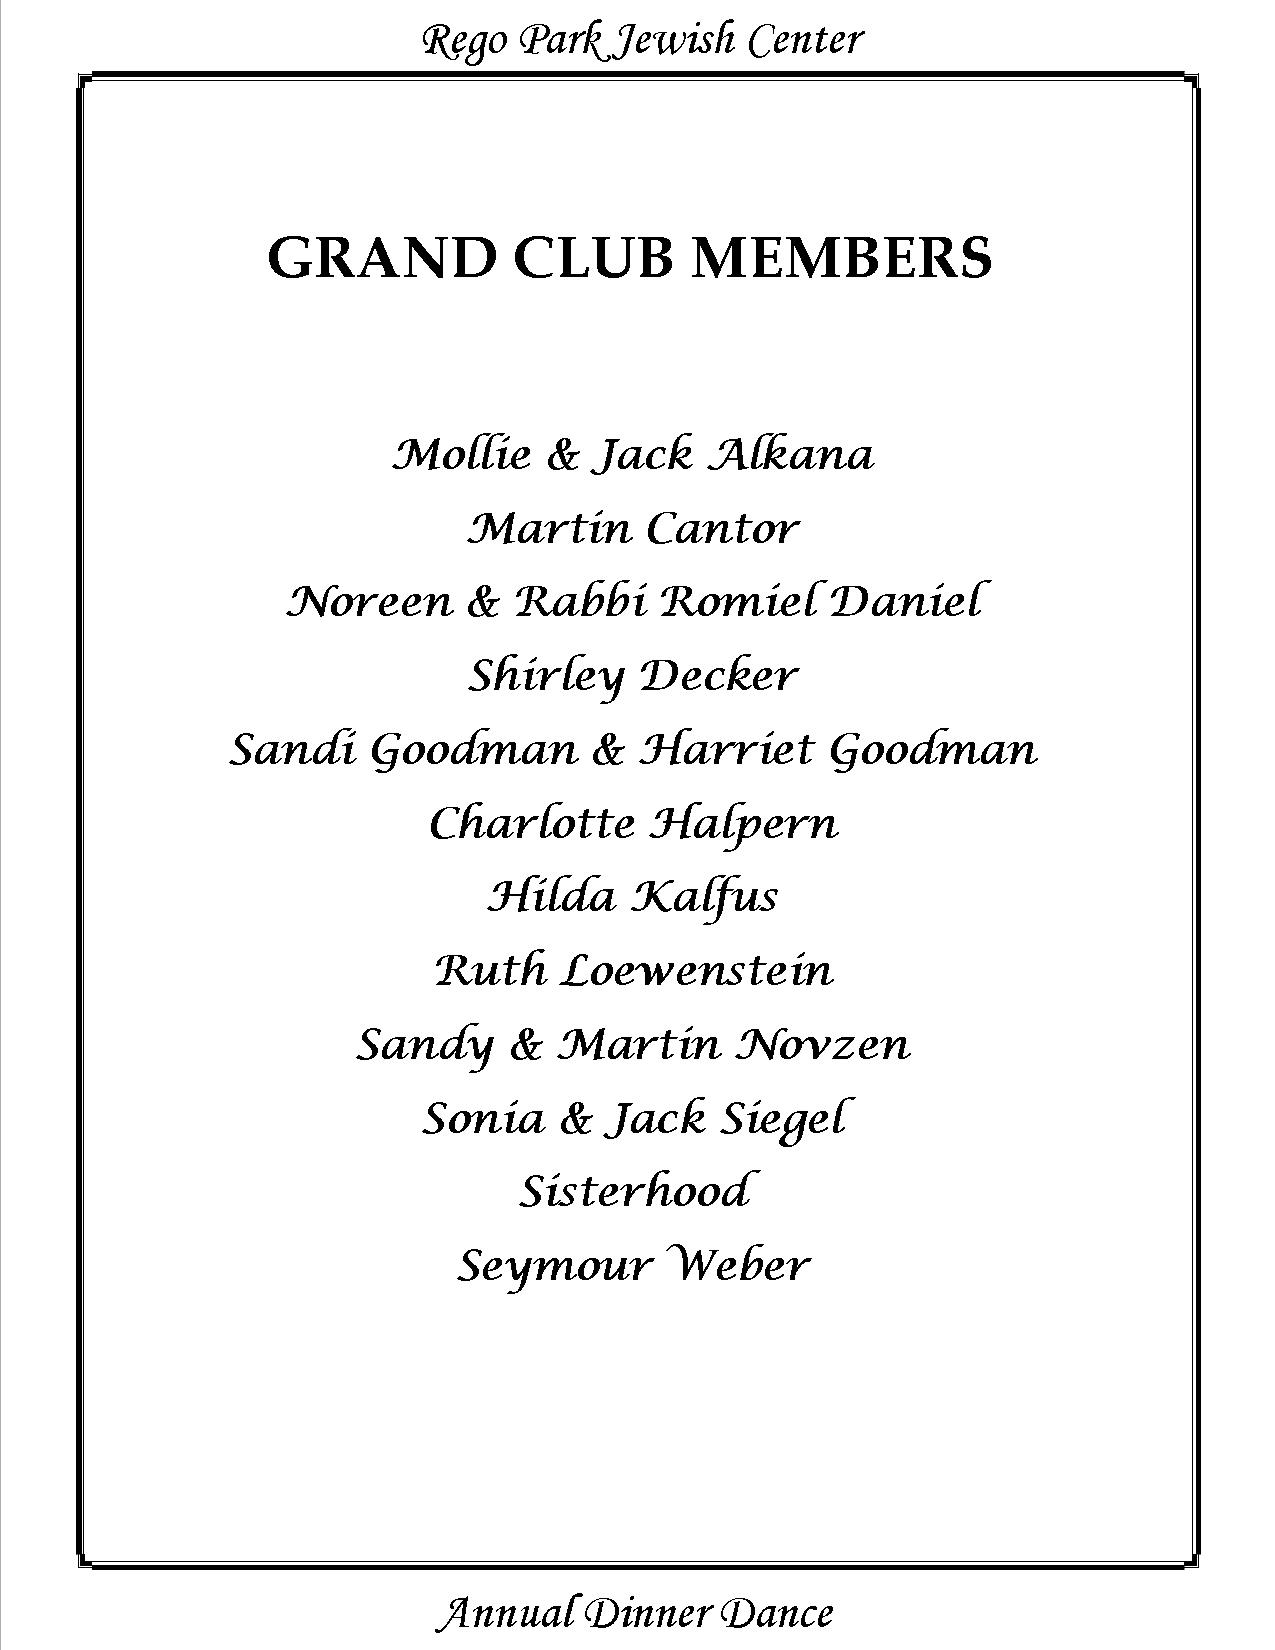 Grand Club Prelim Page 8 - Copy.jpg